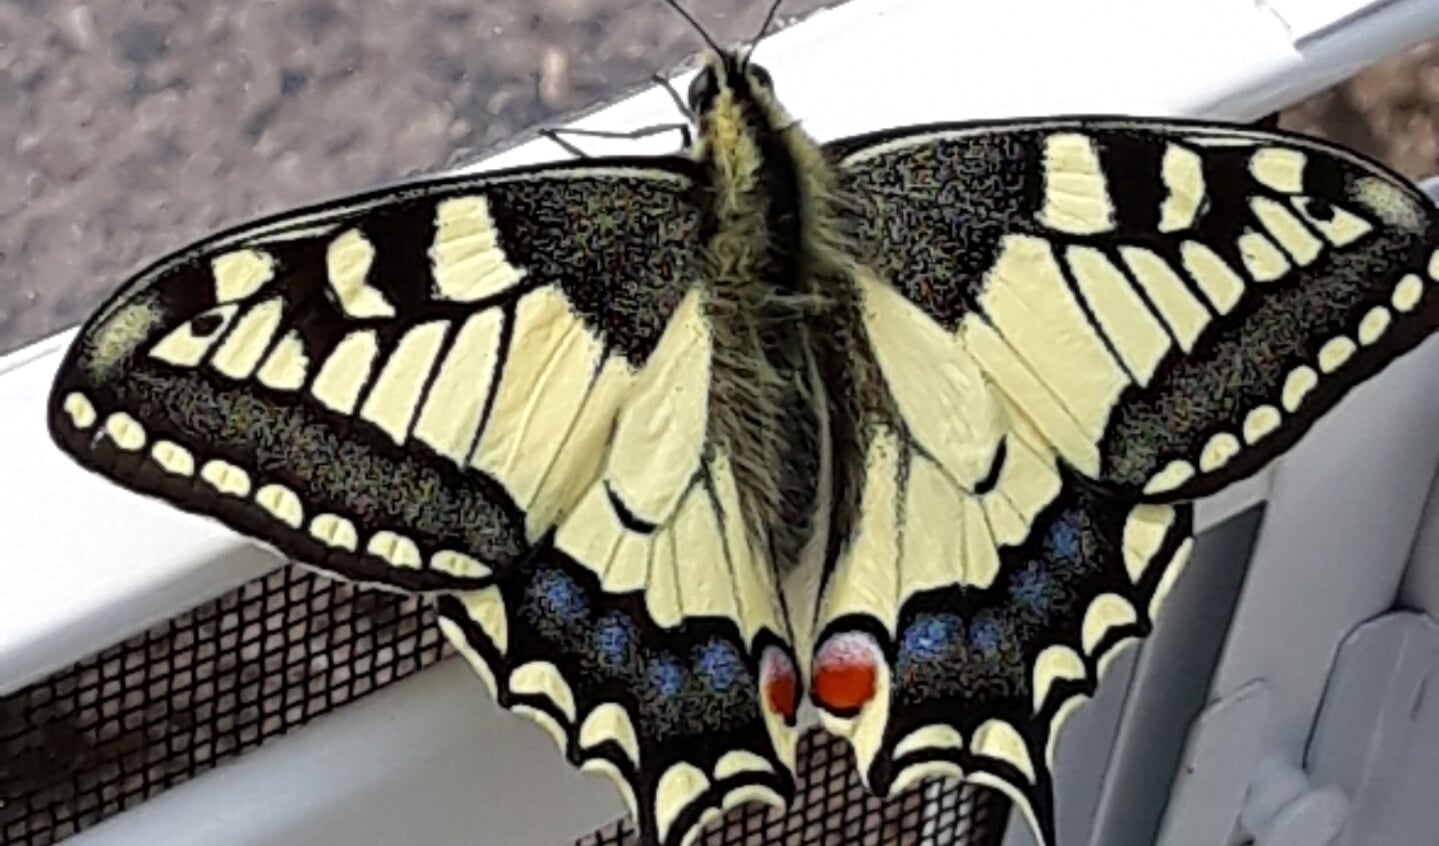 Koninginnepage vlinder